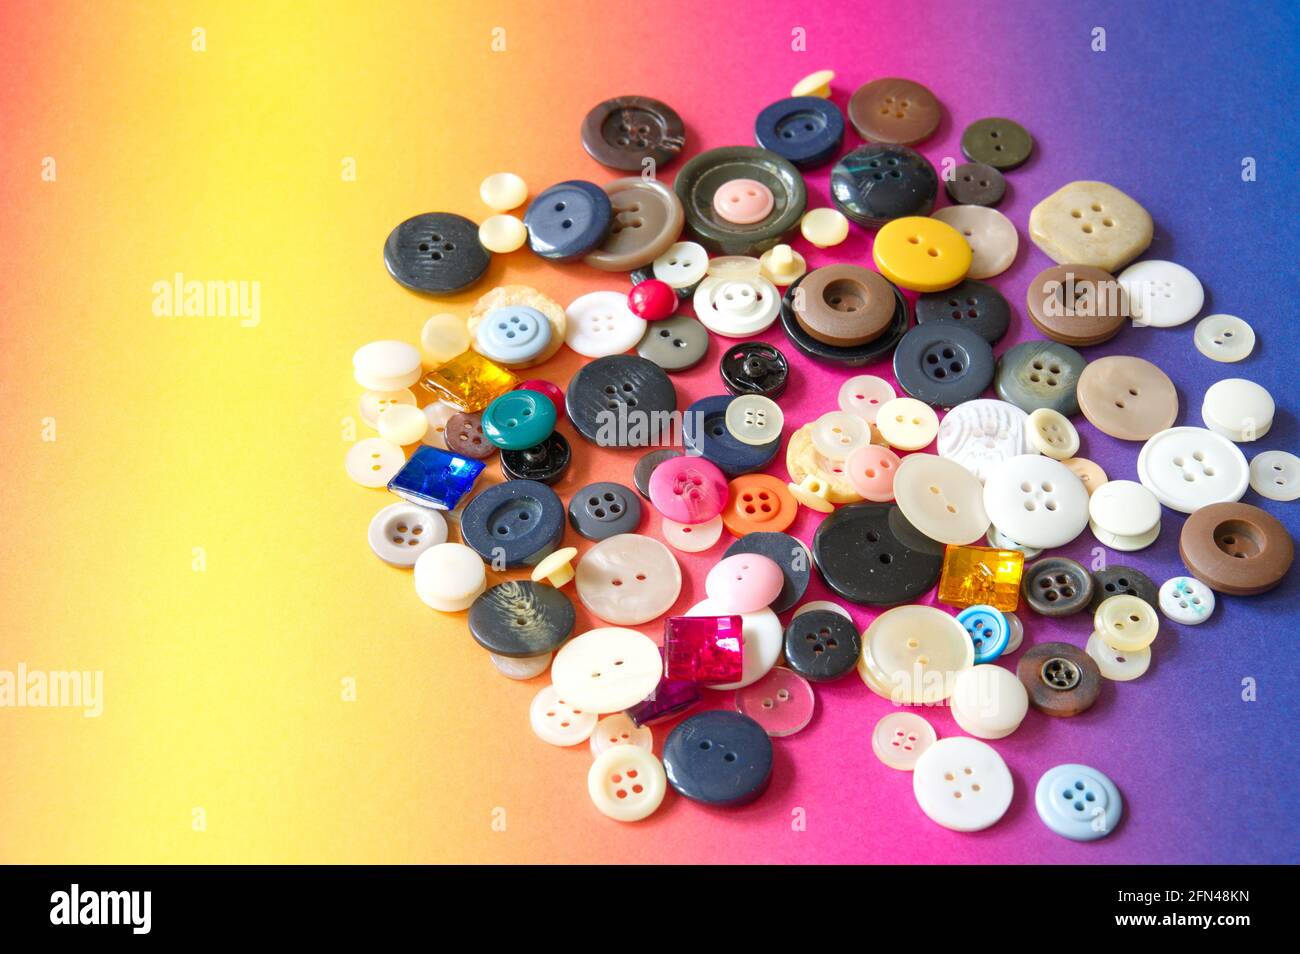 Capa plana de botones de costura sobre fondo colorido Foto de stock